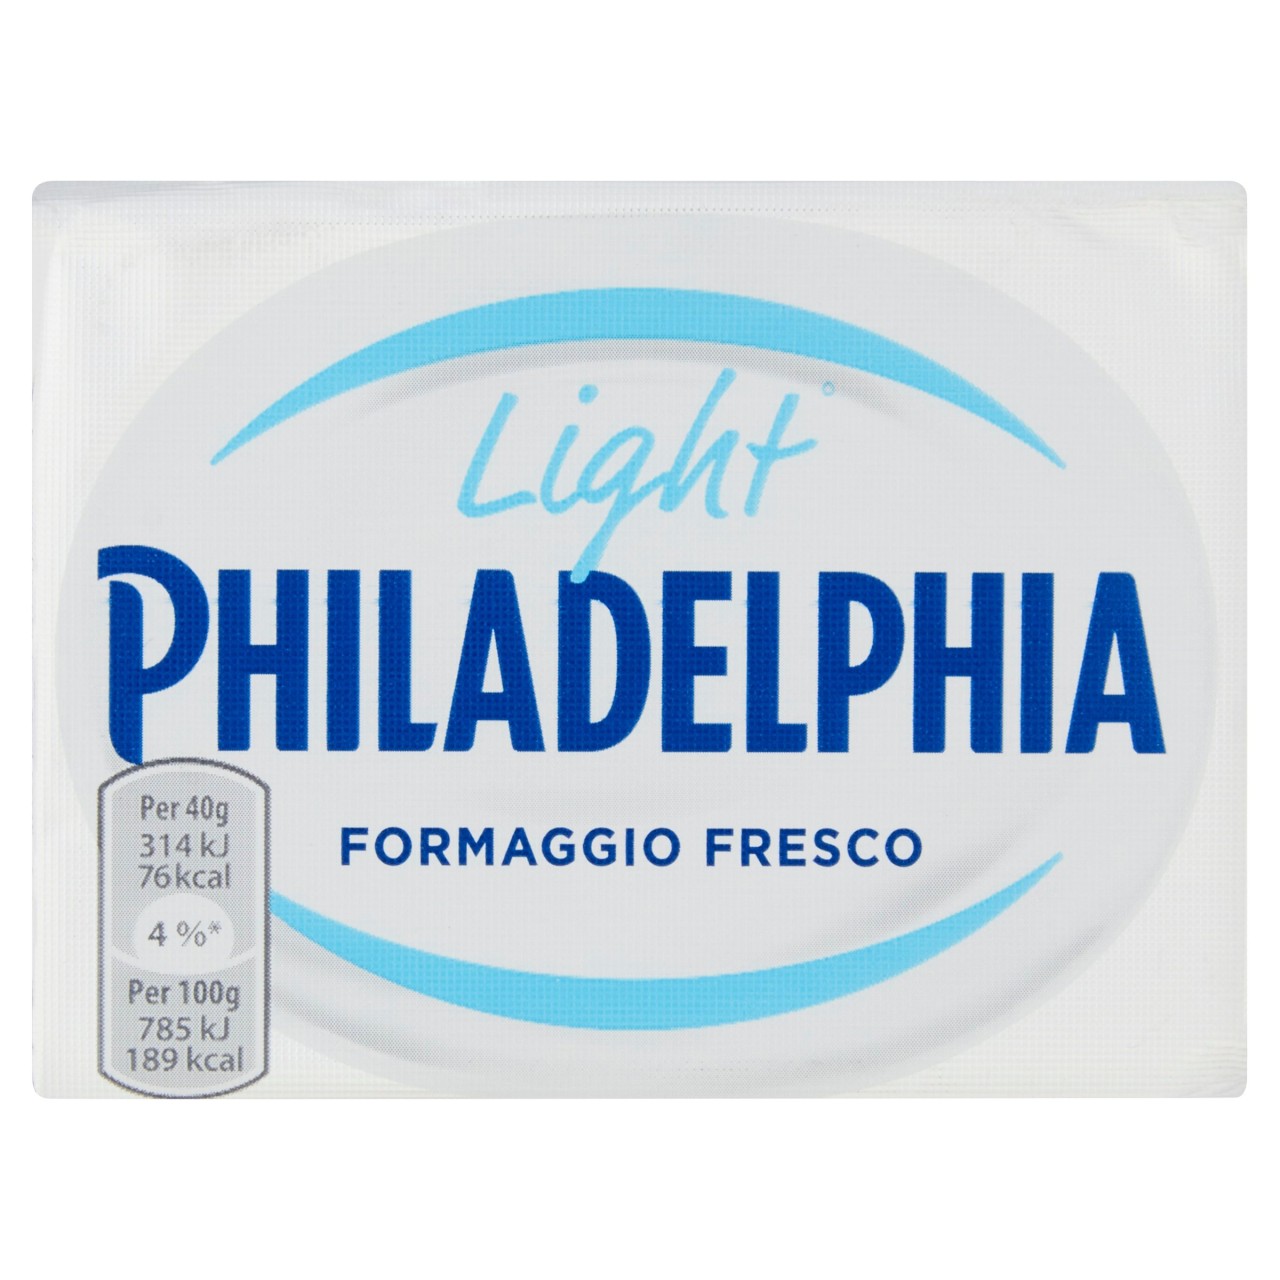 Philadelphia Light formaggio fresco spalmabile - 80 g